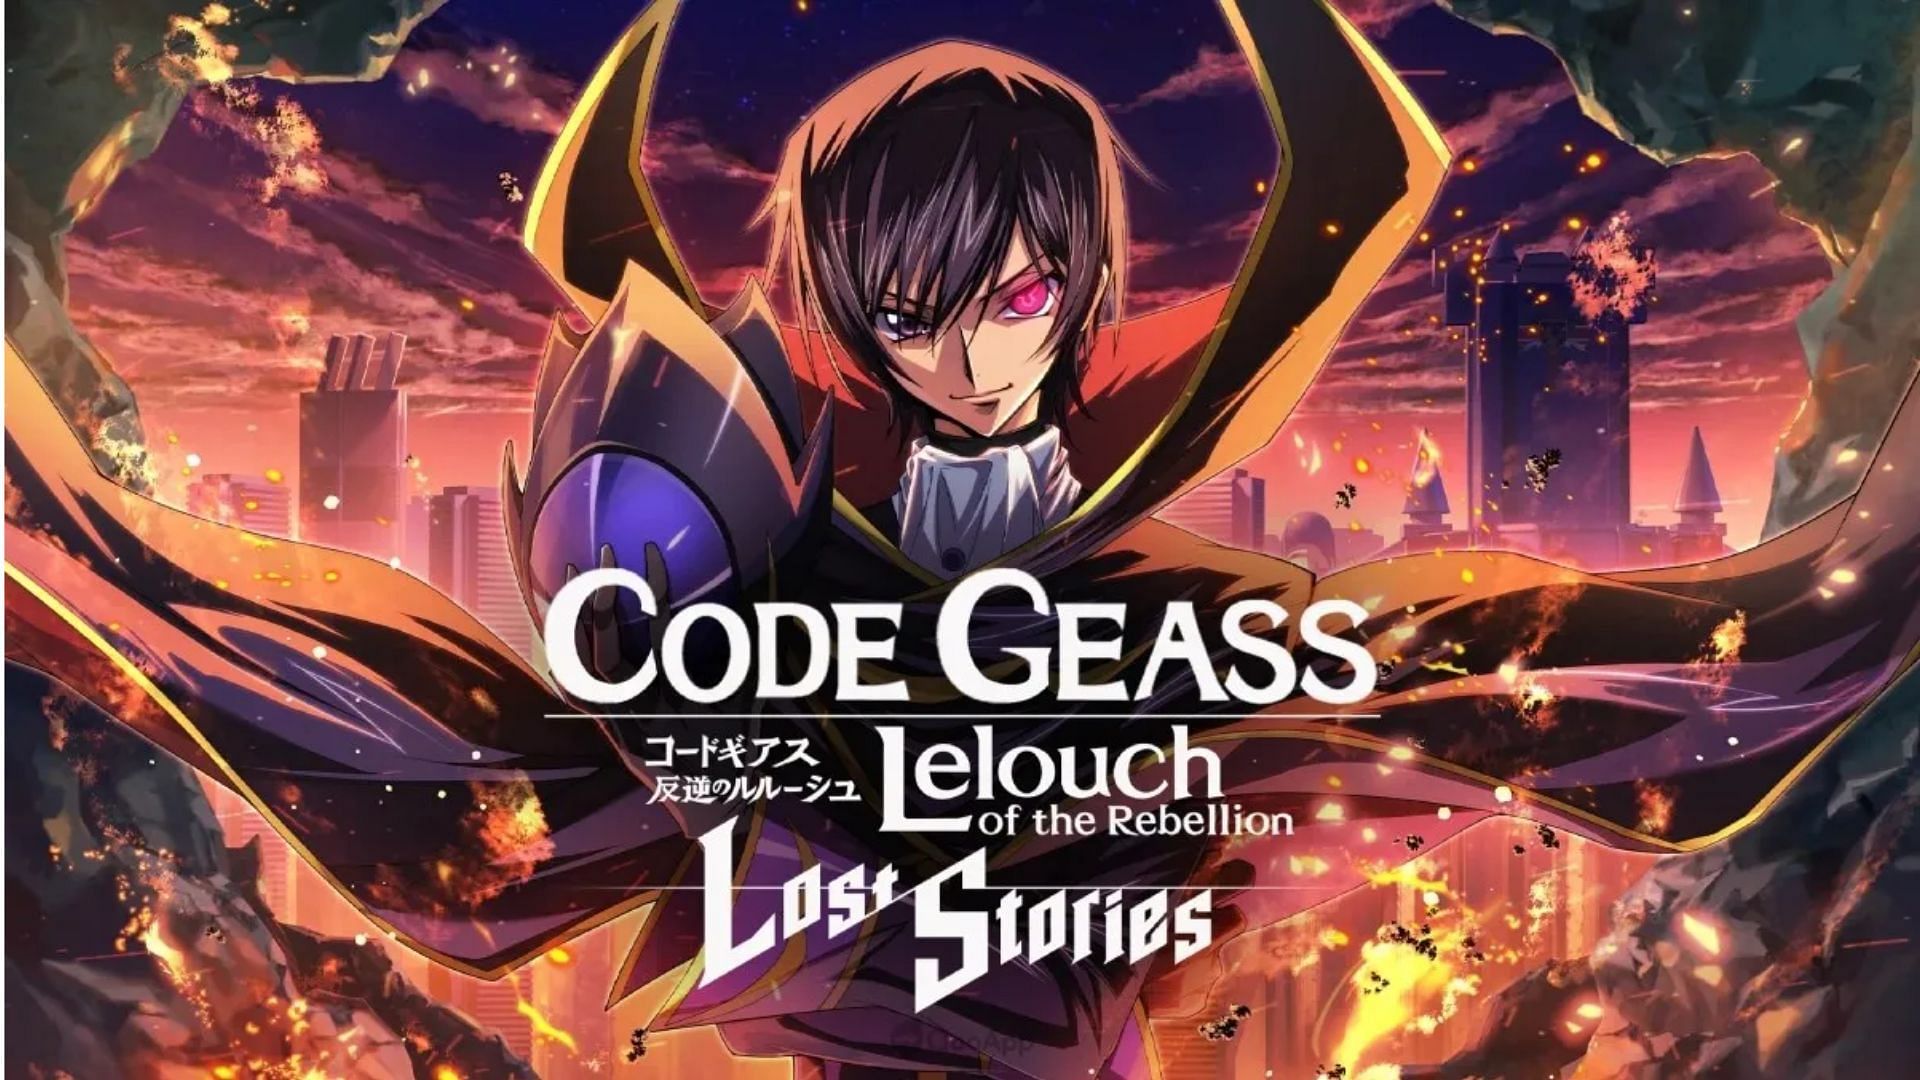 Code Geass pre-registration